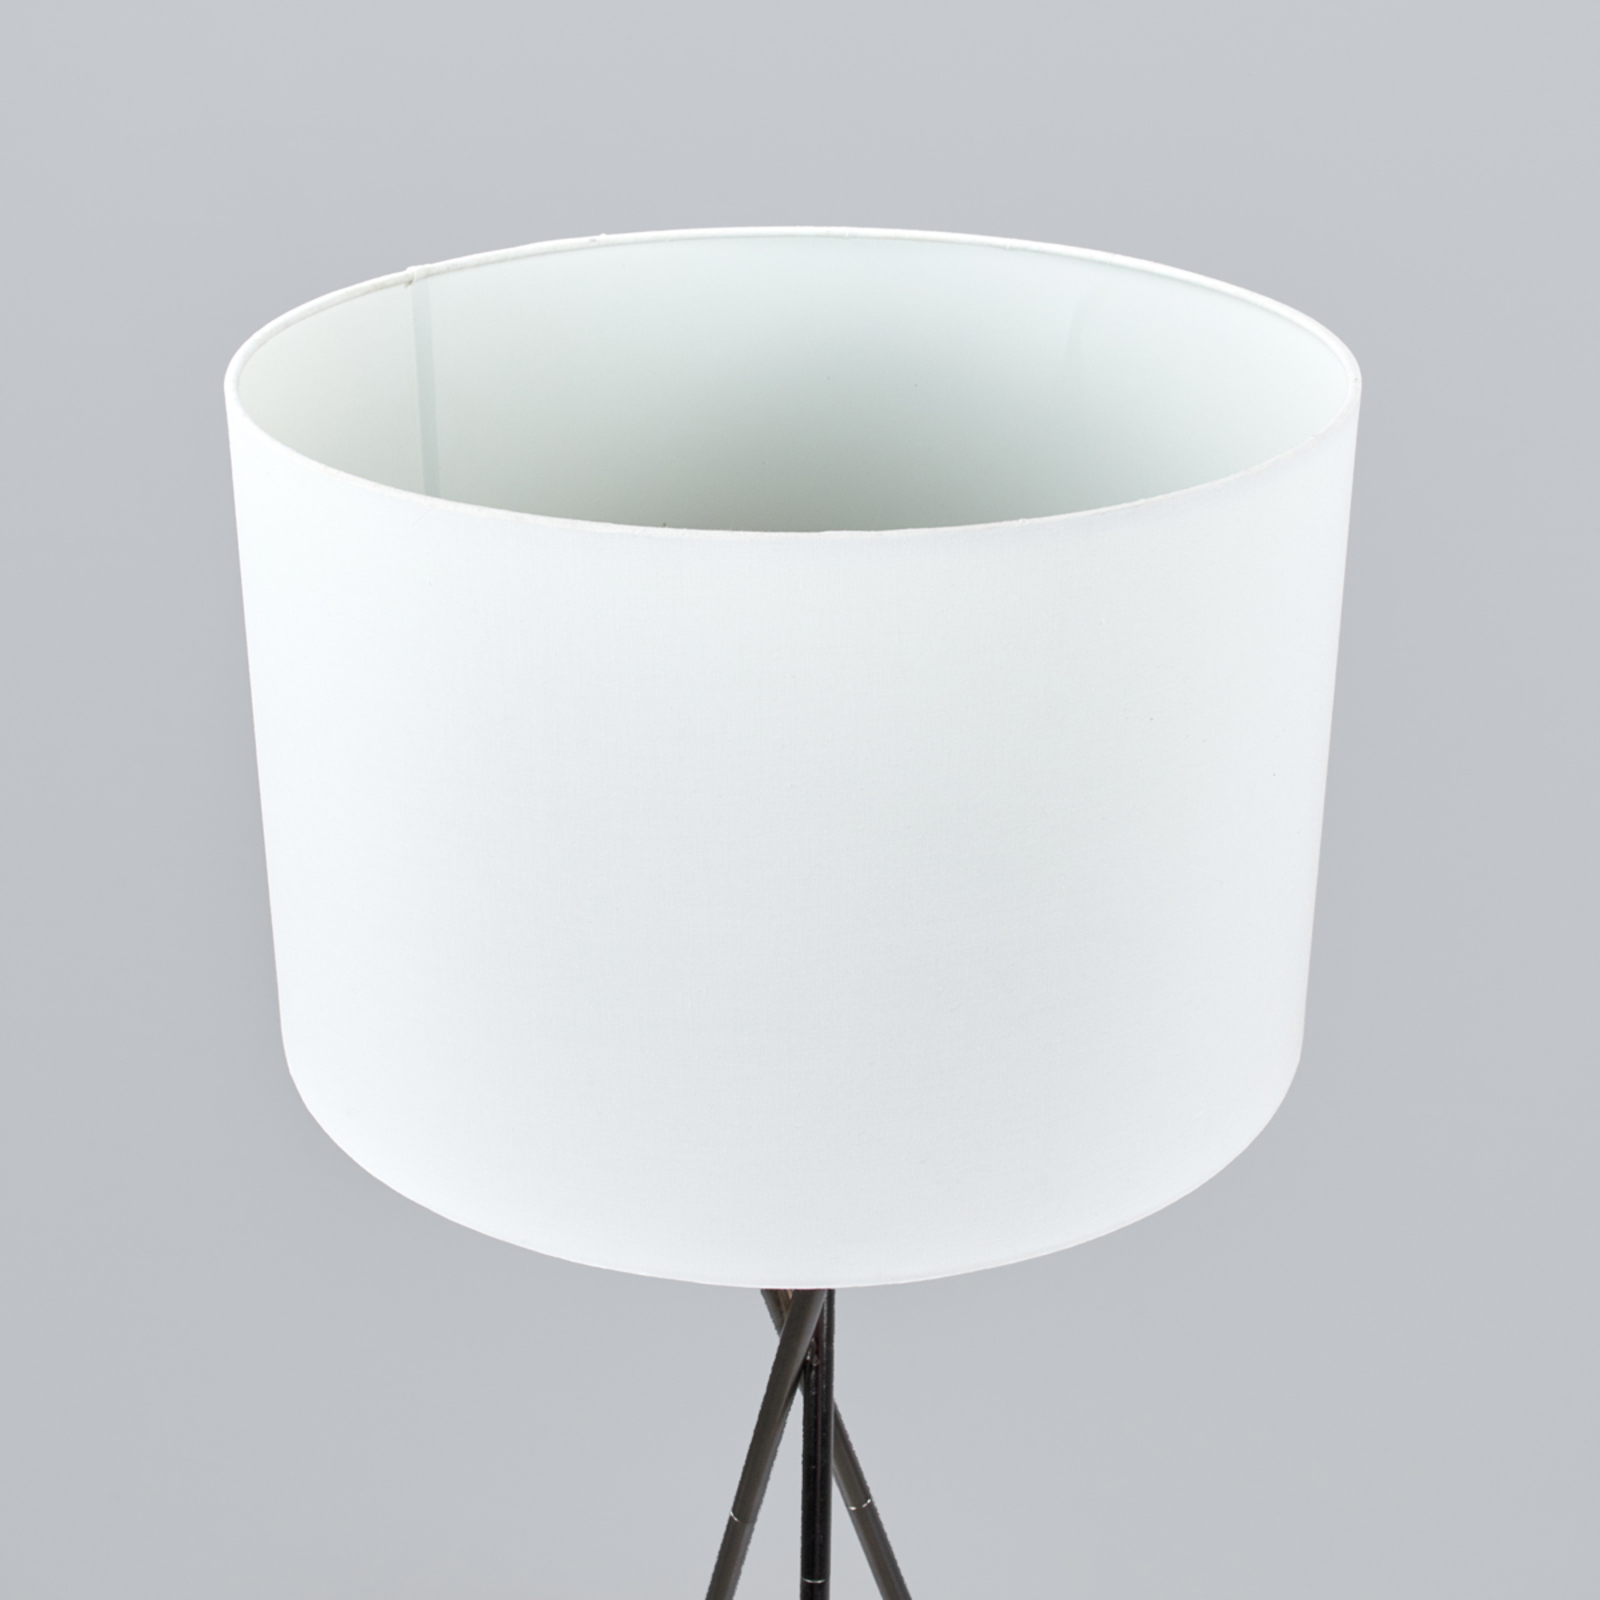 Tripod floor lamp Fiby, white fabric lampshade